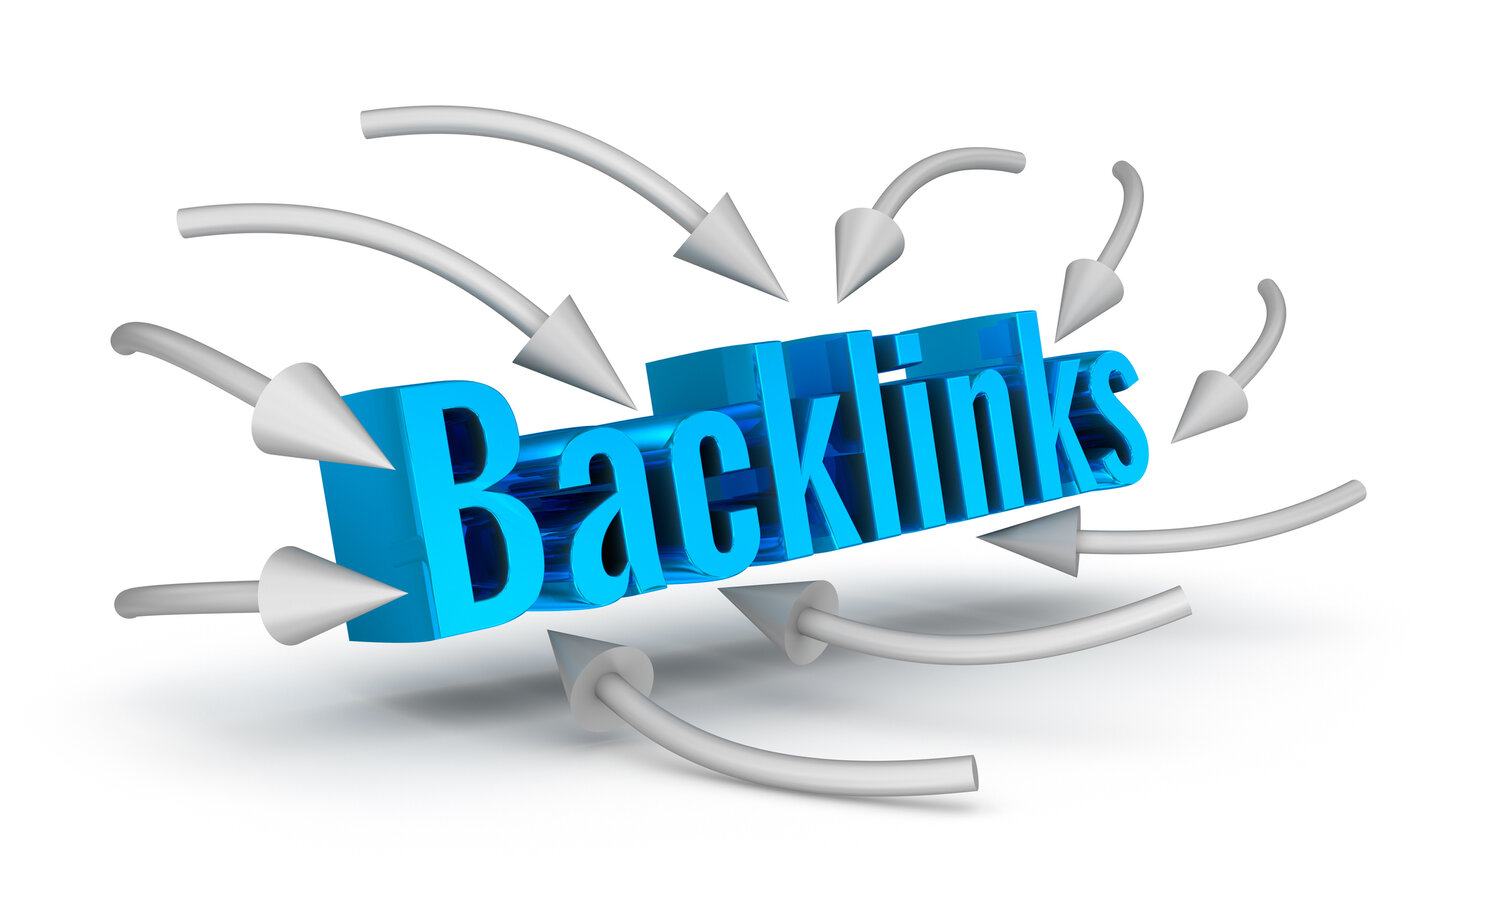 Check your Backlinks